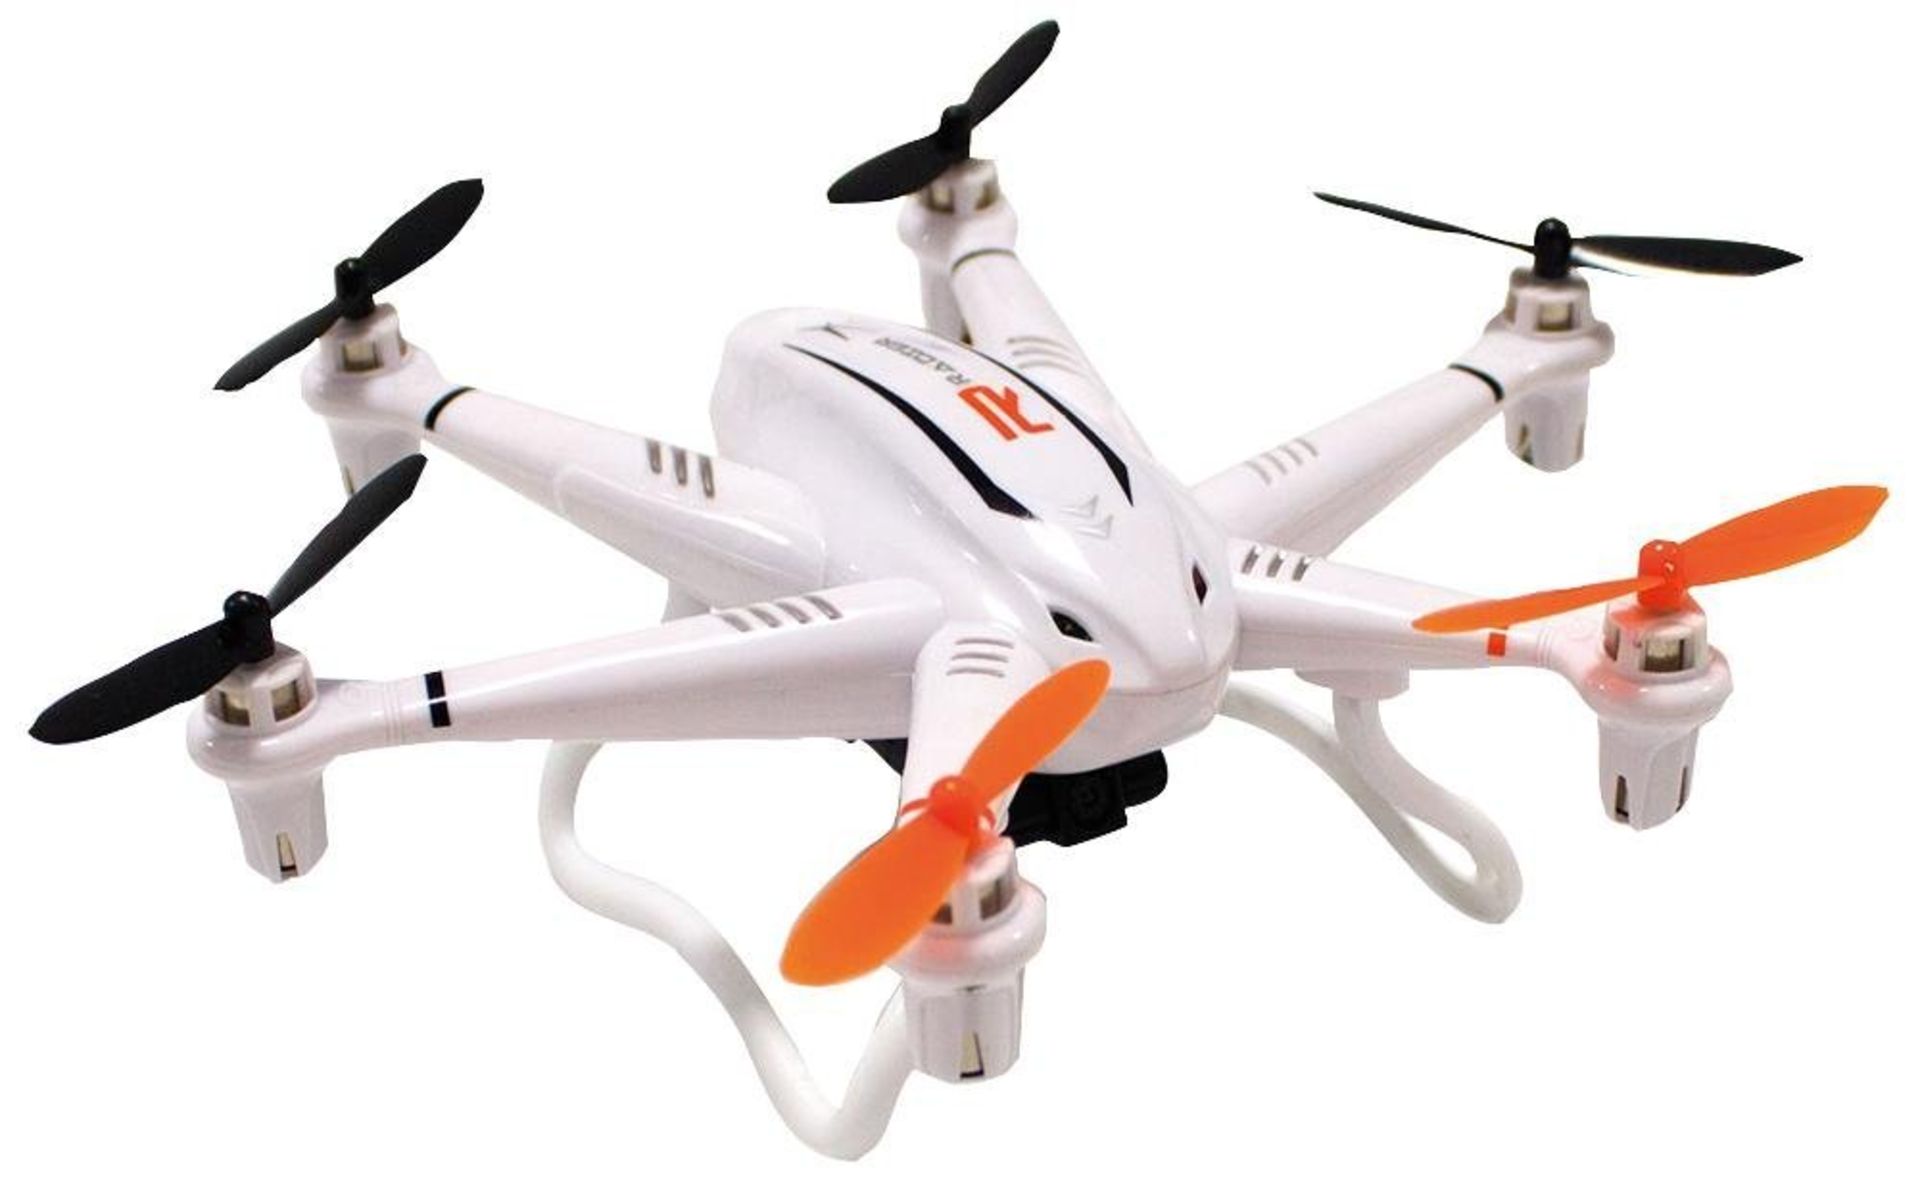 V *TRADE QTY* Brand New R/C Orbit Explorer Drone With Camera - Amazon Price £53.95 X 10 YOUR BID